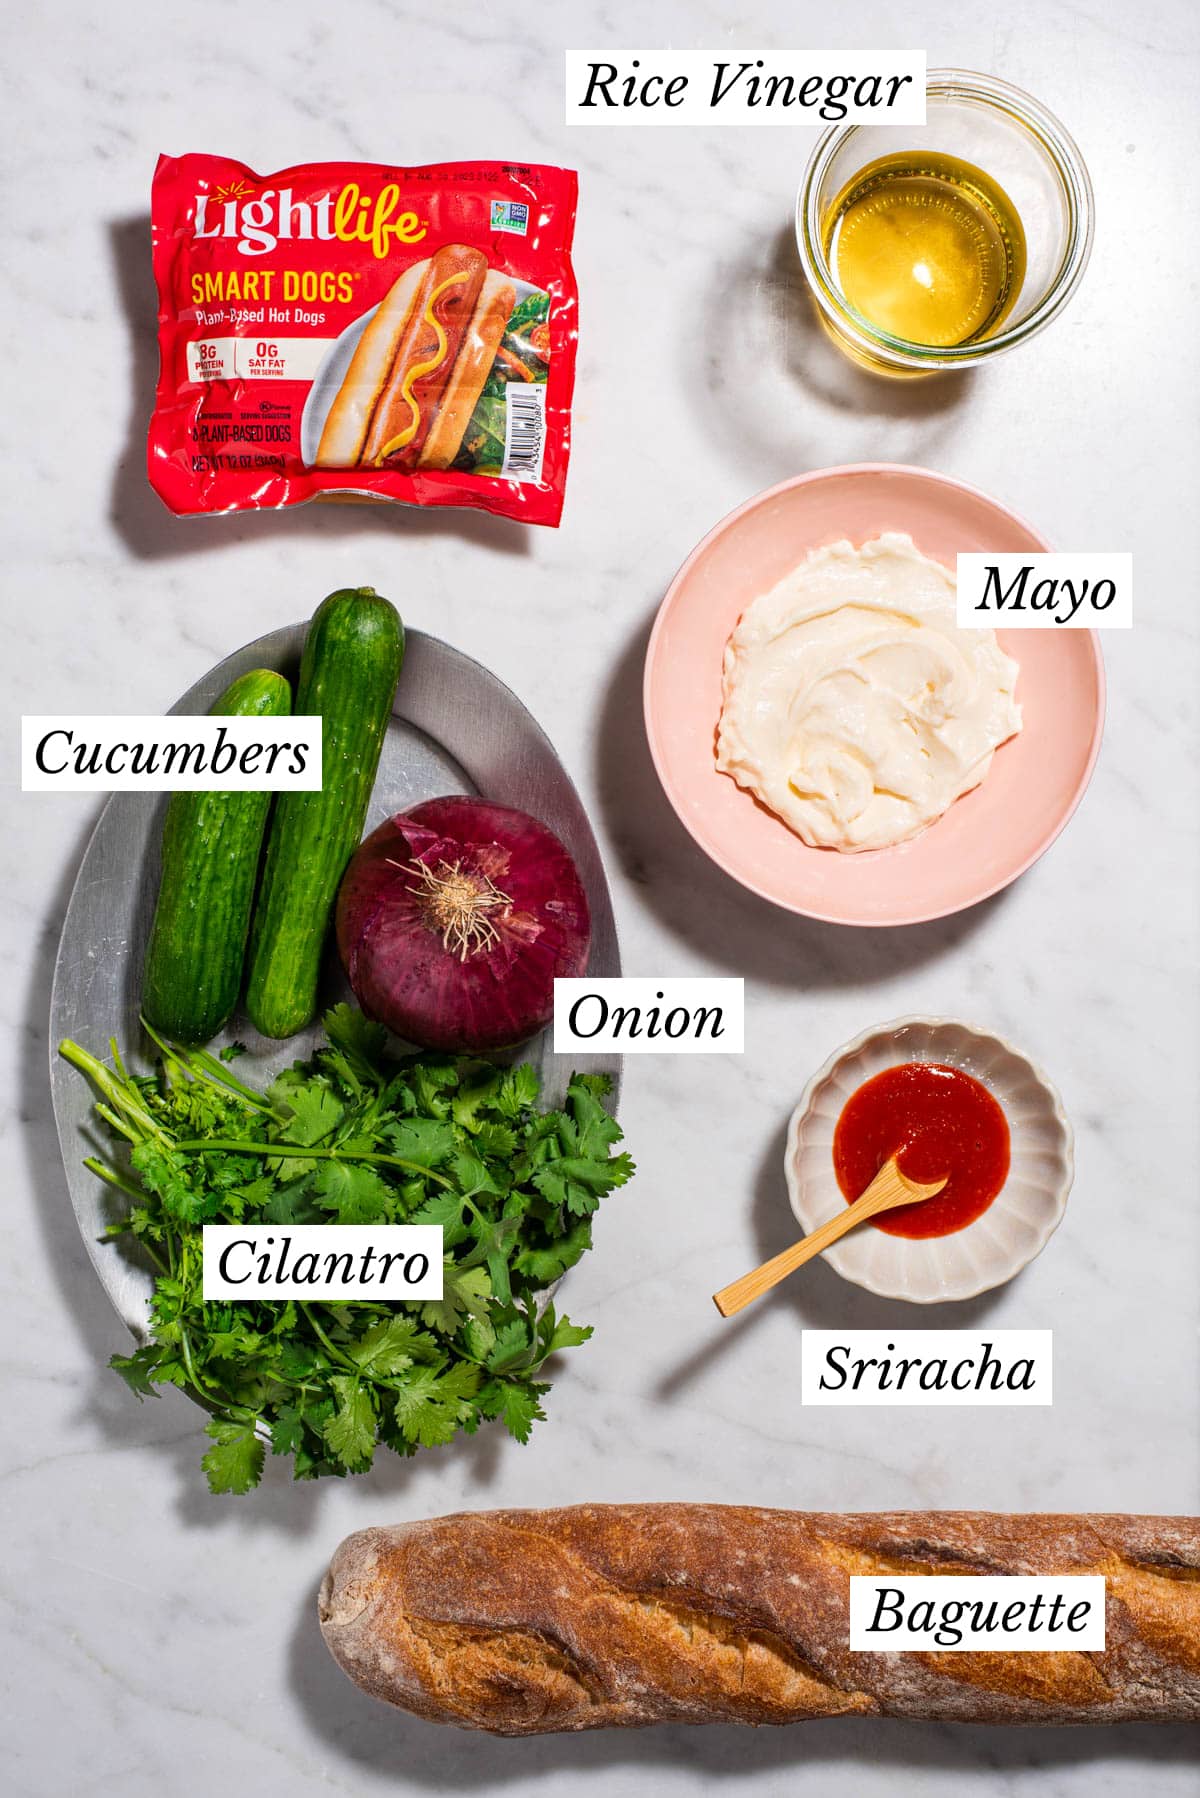 Ingredients gathered to make plant-based hot dog banh mi sandwiches.